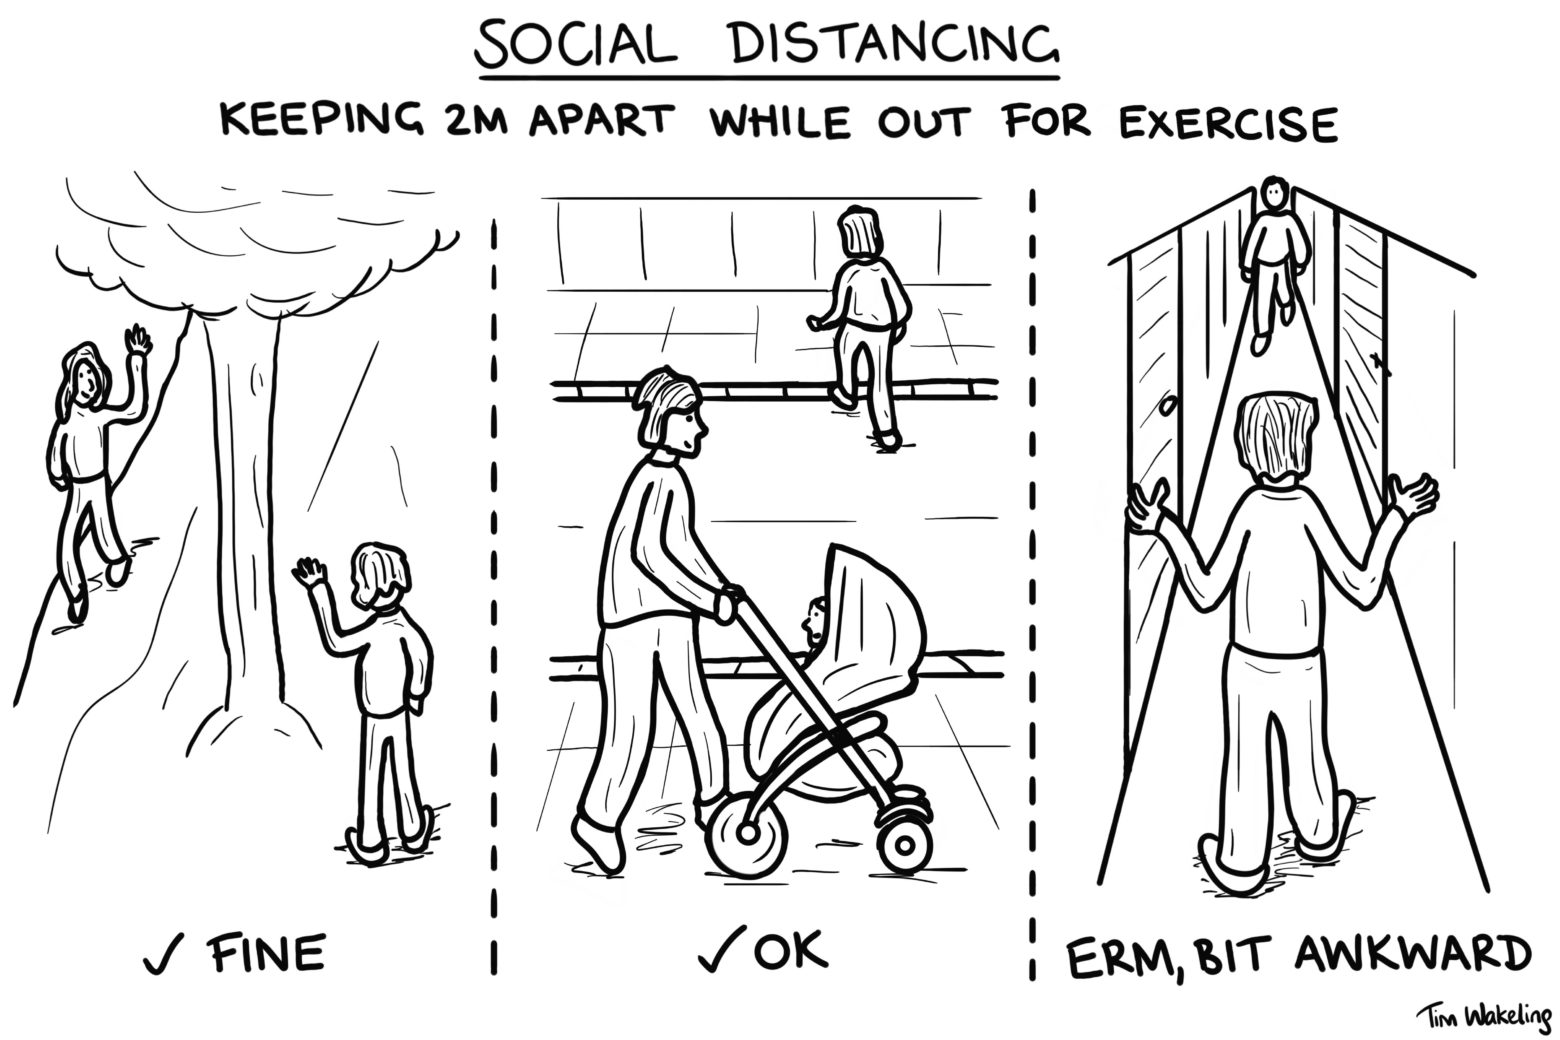 Social distancing cartoon